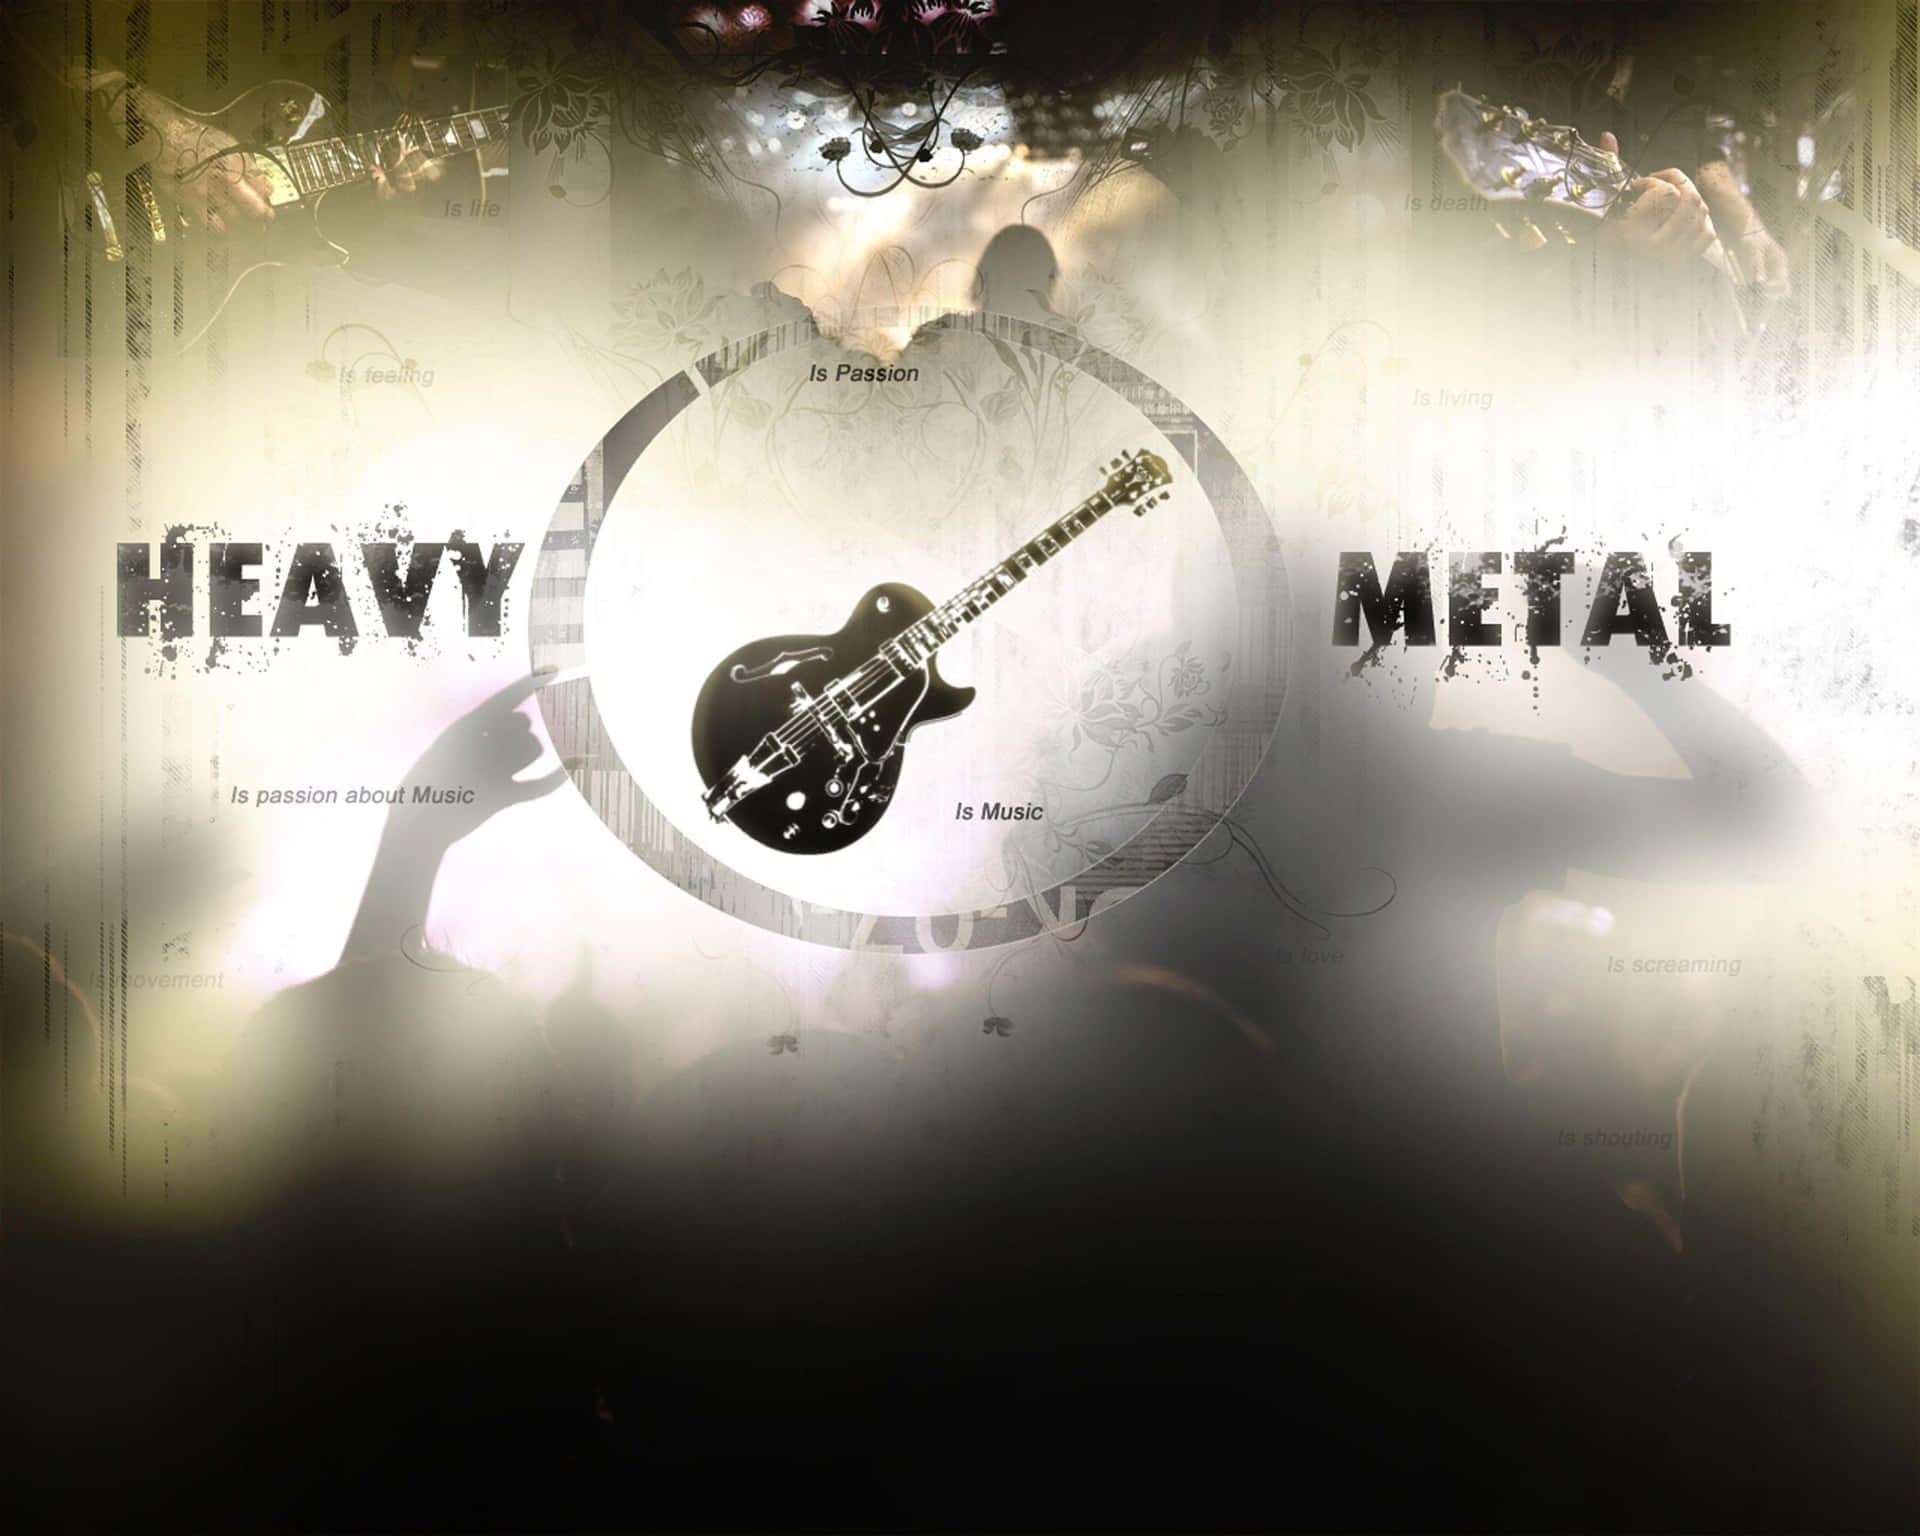 Roaring Flames And Metallic Skull - Essence Of Heavy Metal Background